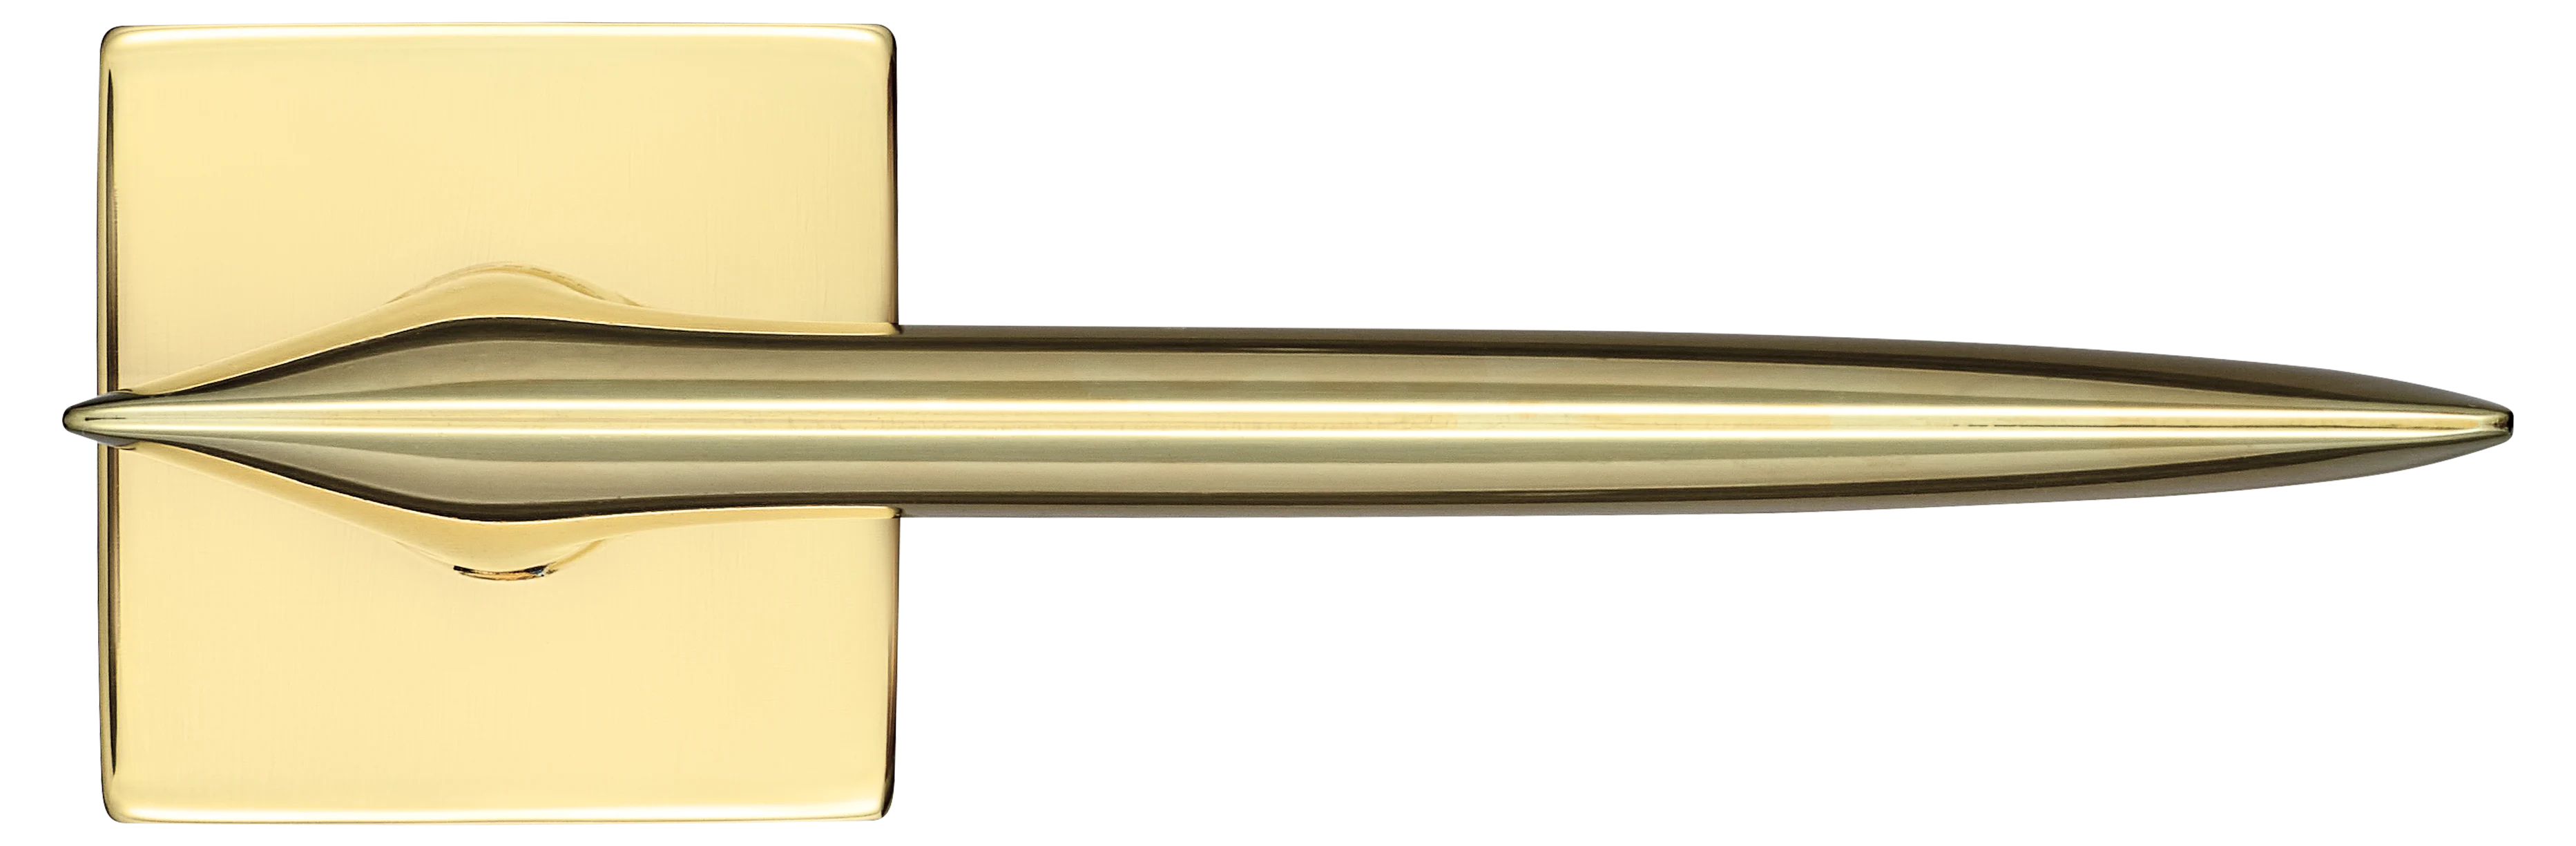 GALACTIC S5 OTL, ручка дверная, цвет -  золото фото купить в Сочи